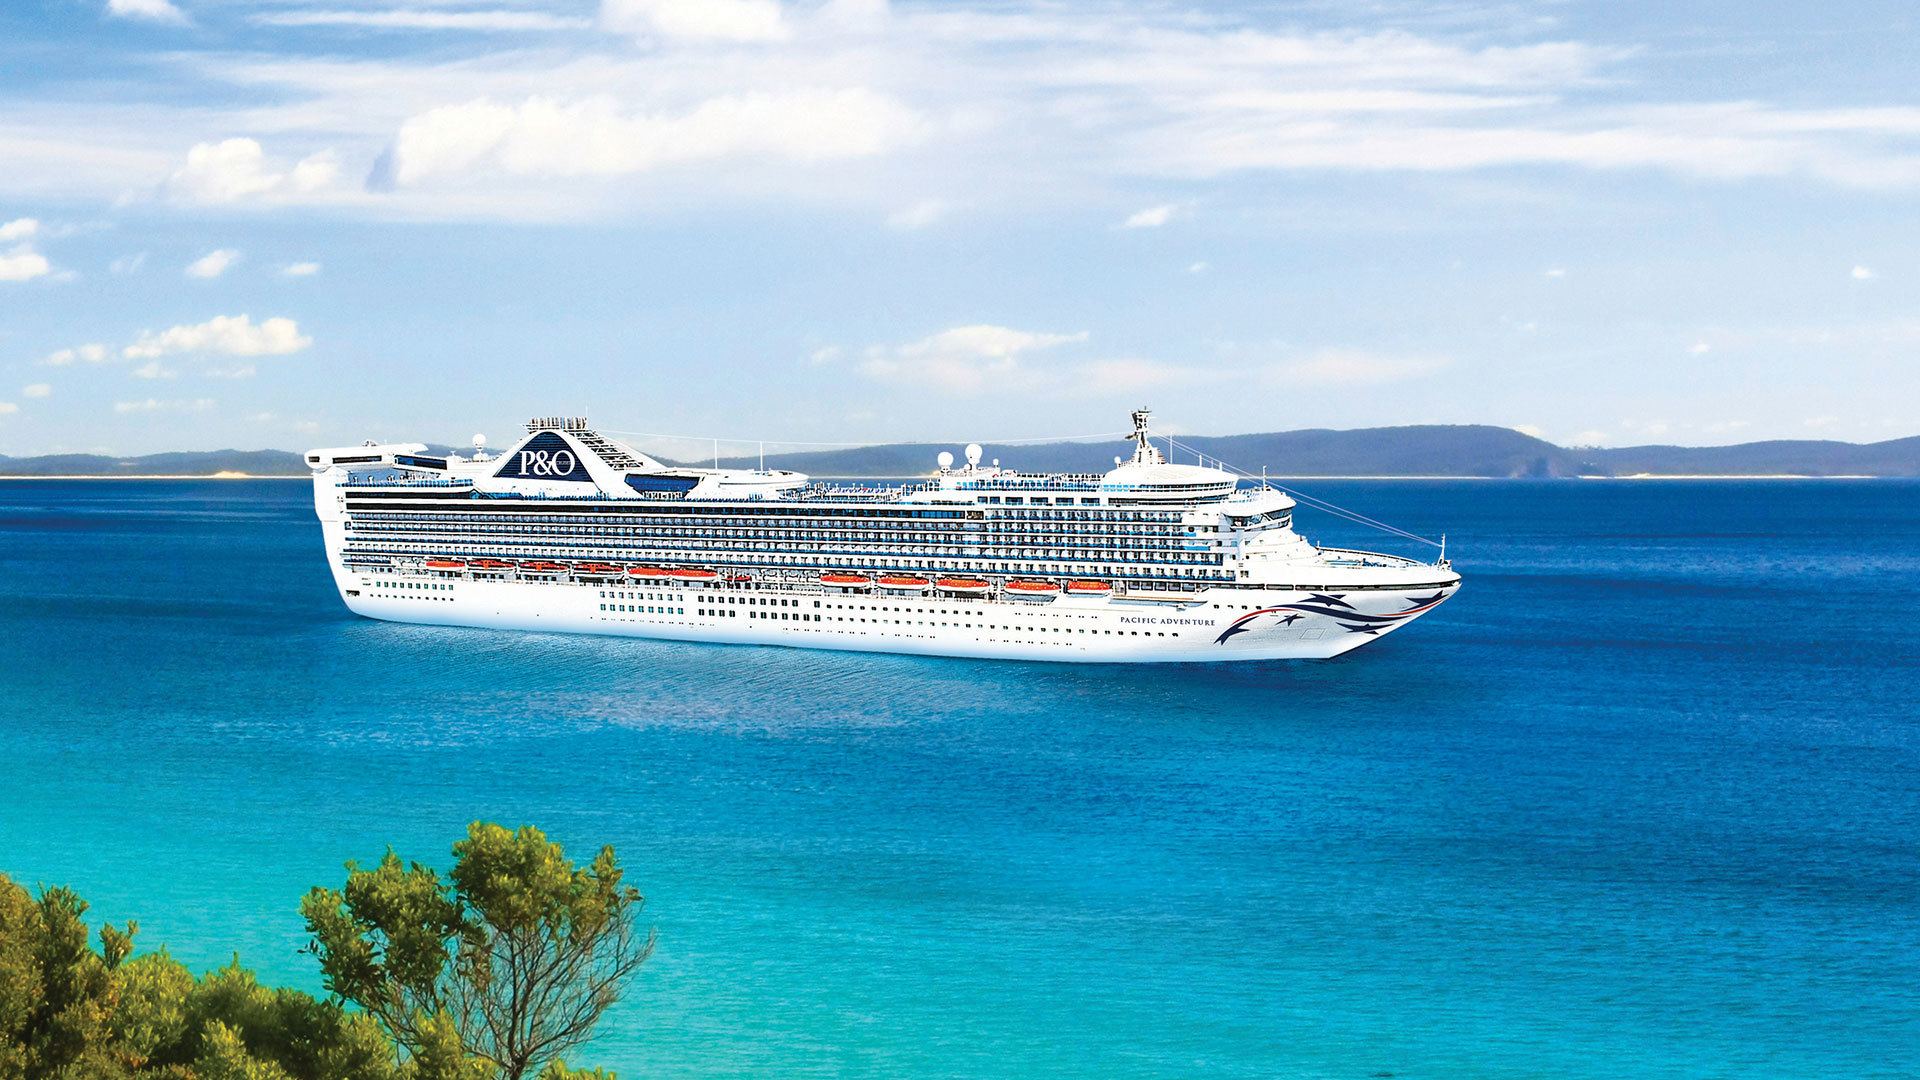 P&O Cruises announced to cancel cruises until 2021